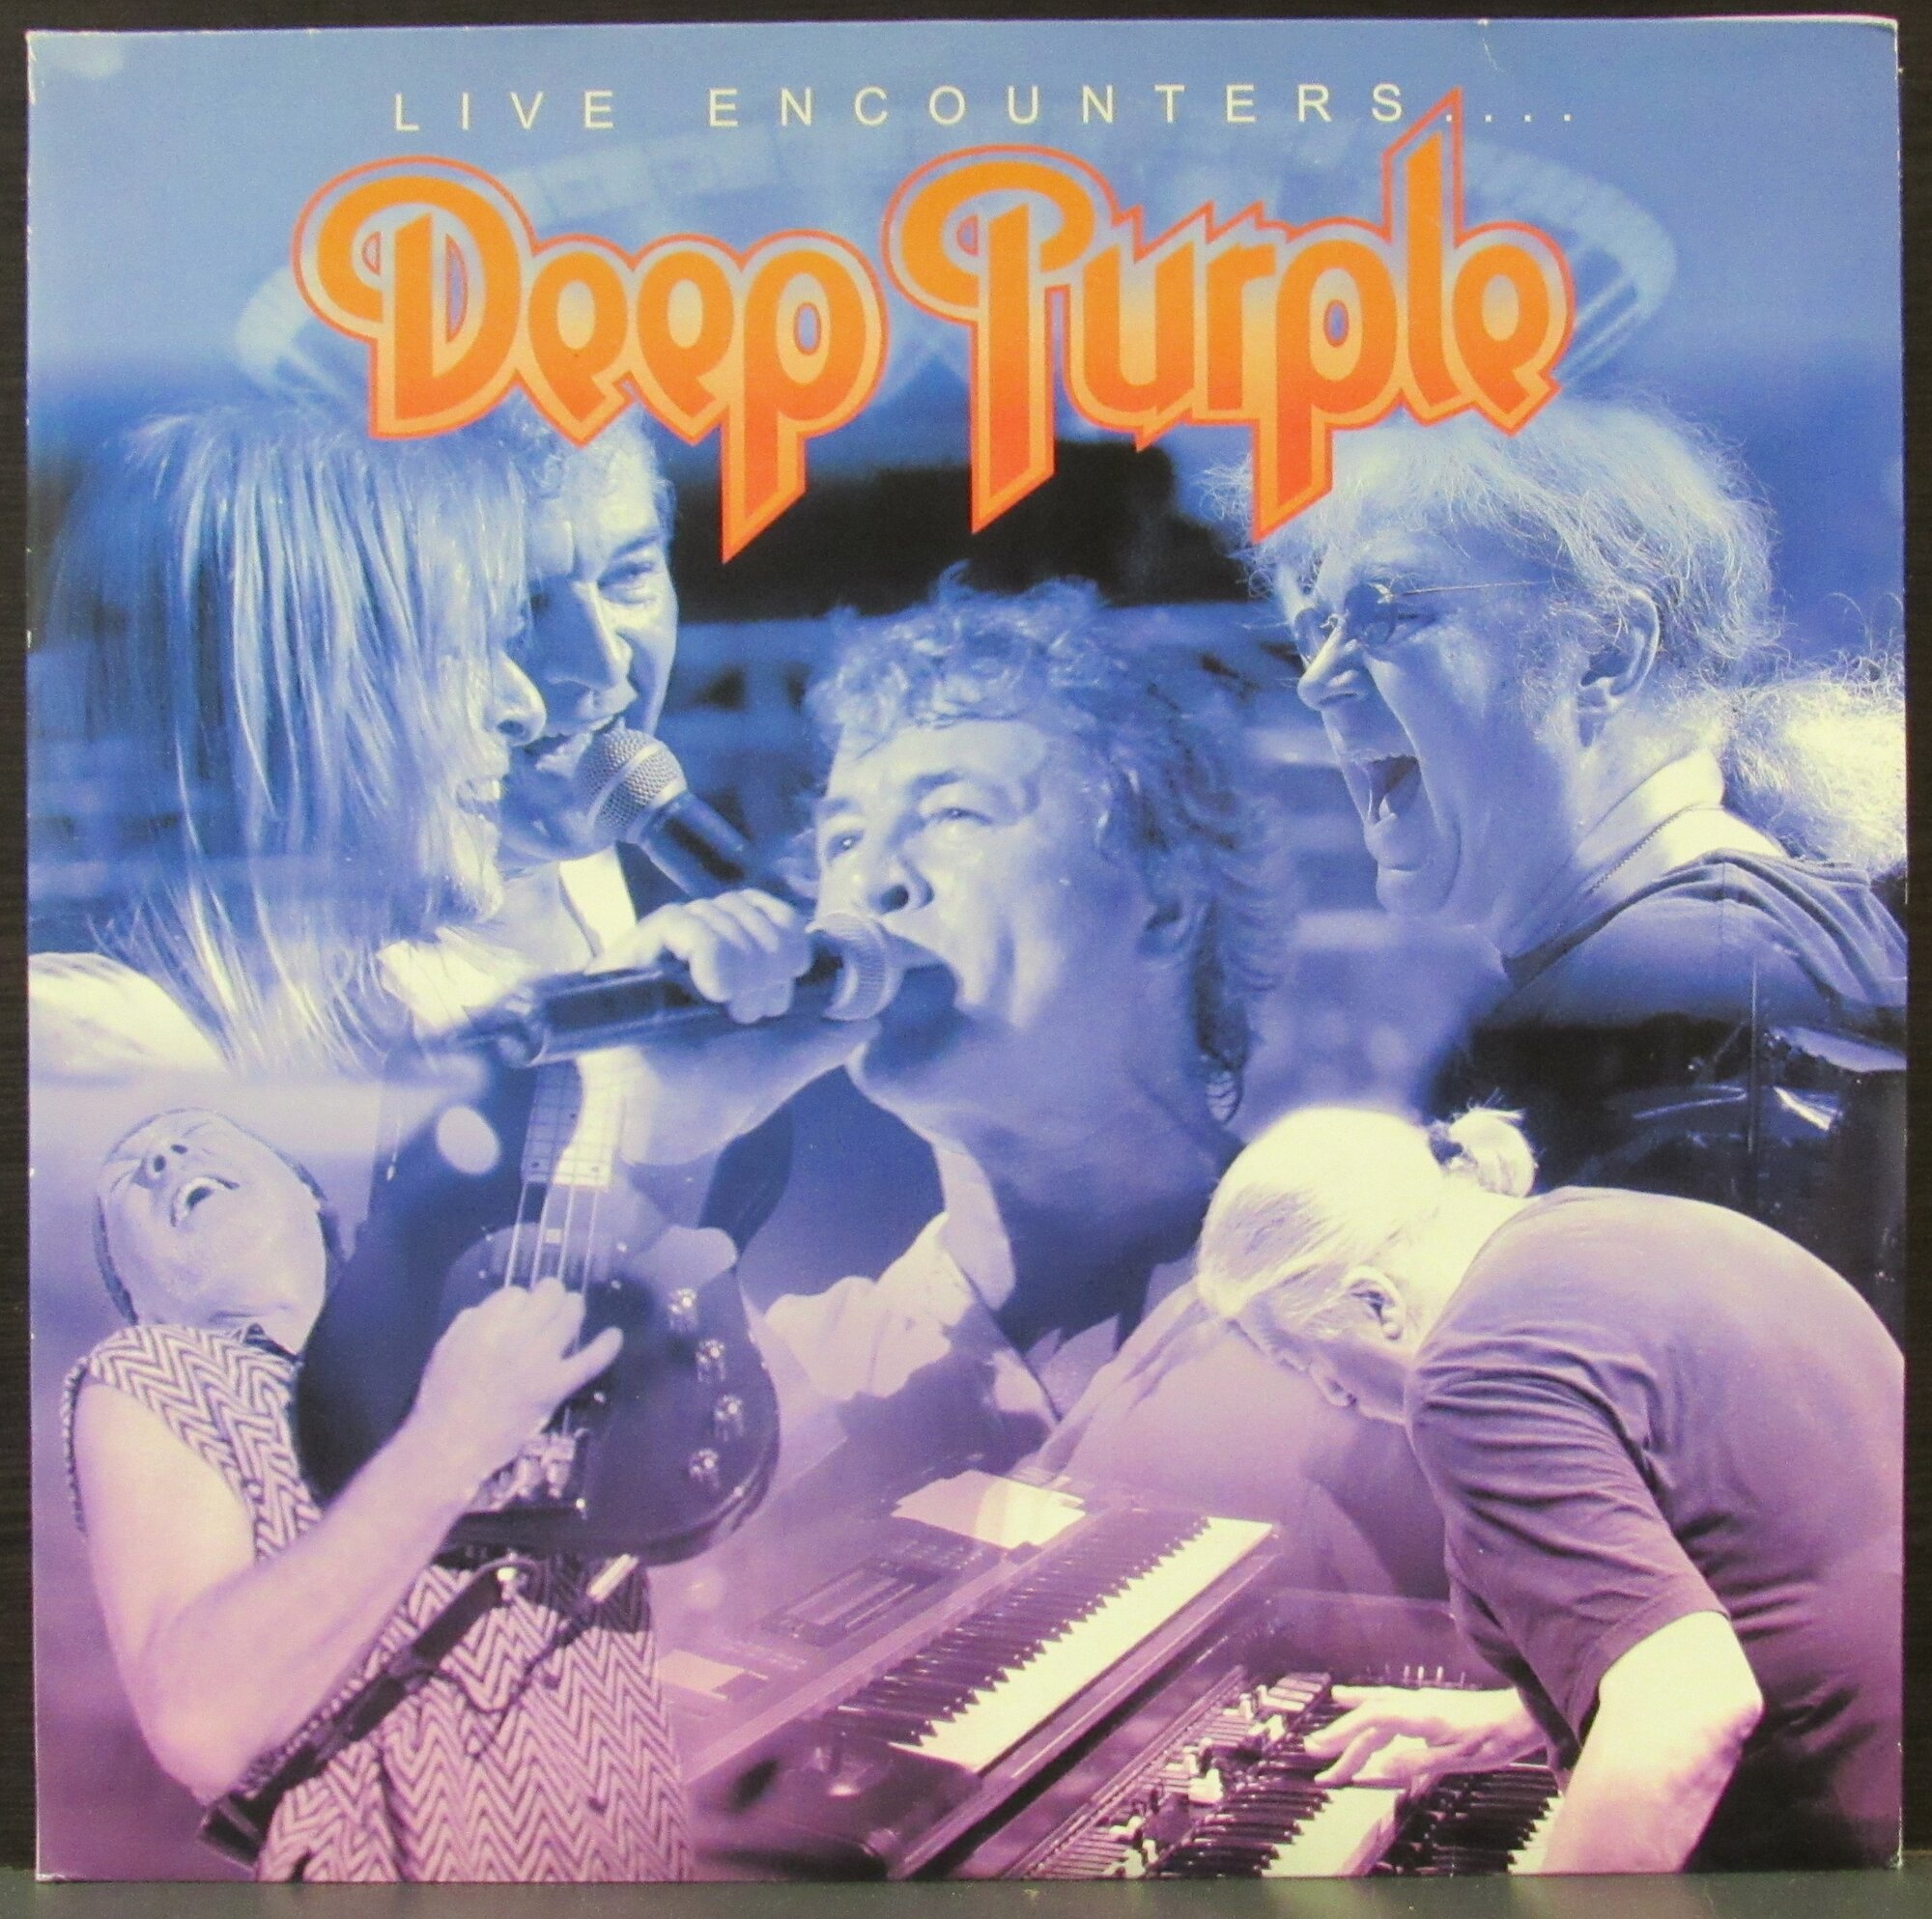 Deep Purple "Виниловая пластинка Deep Purple Live Encounters"